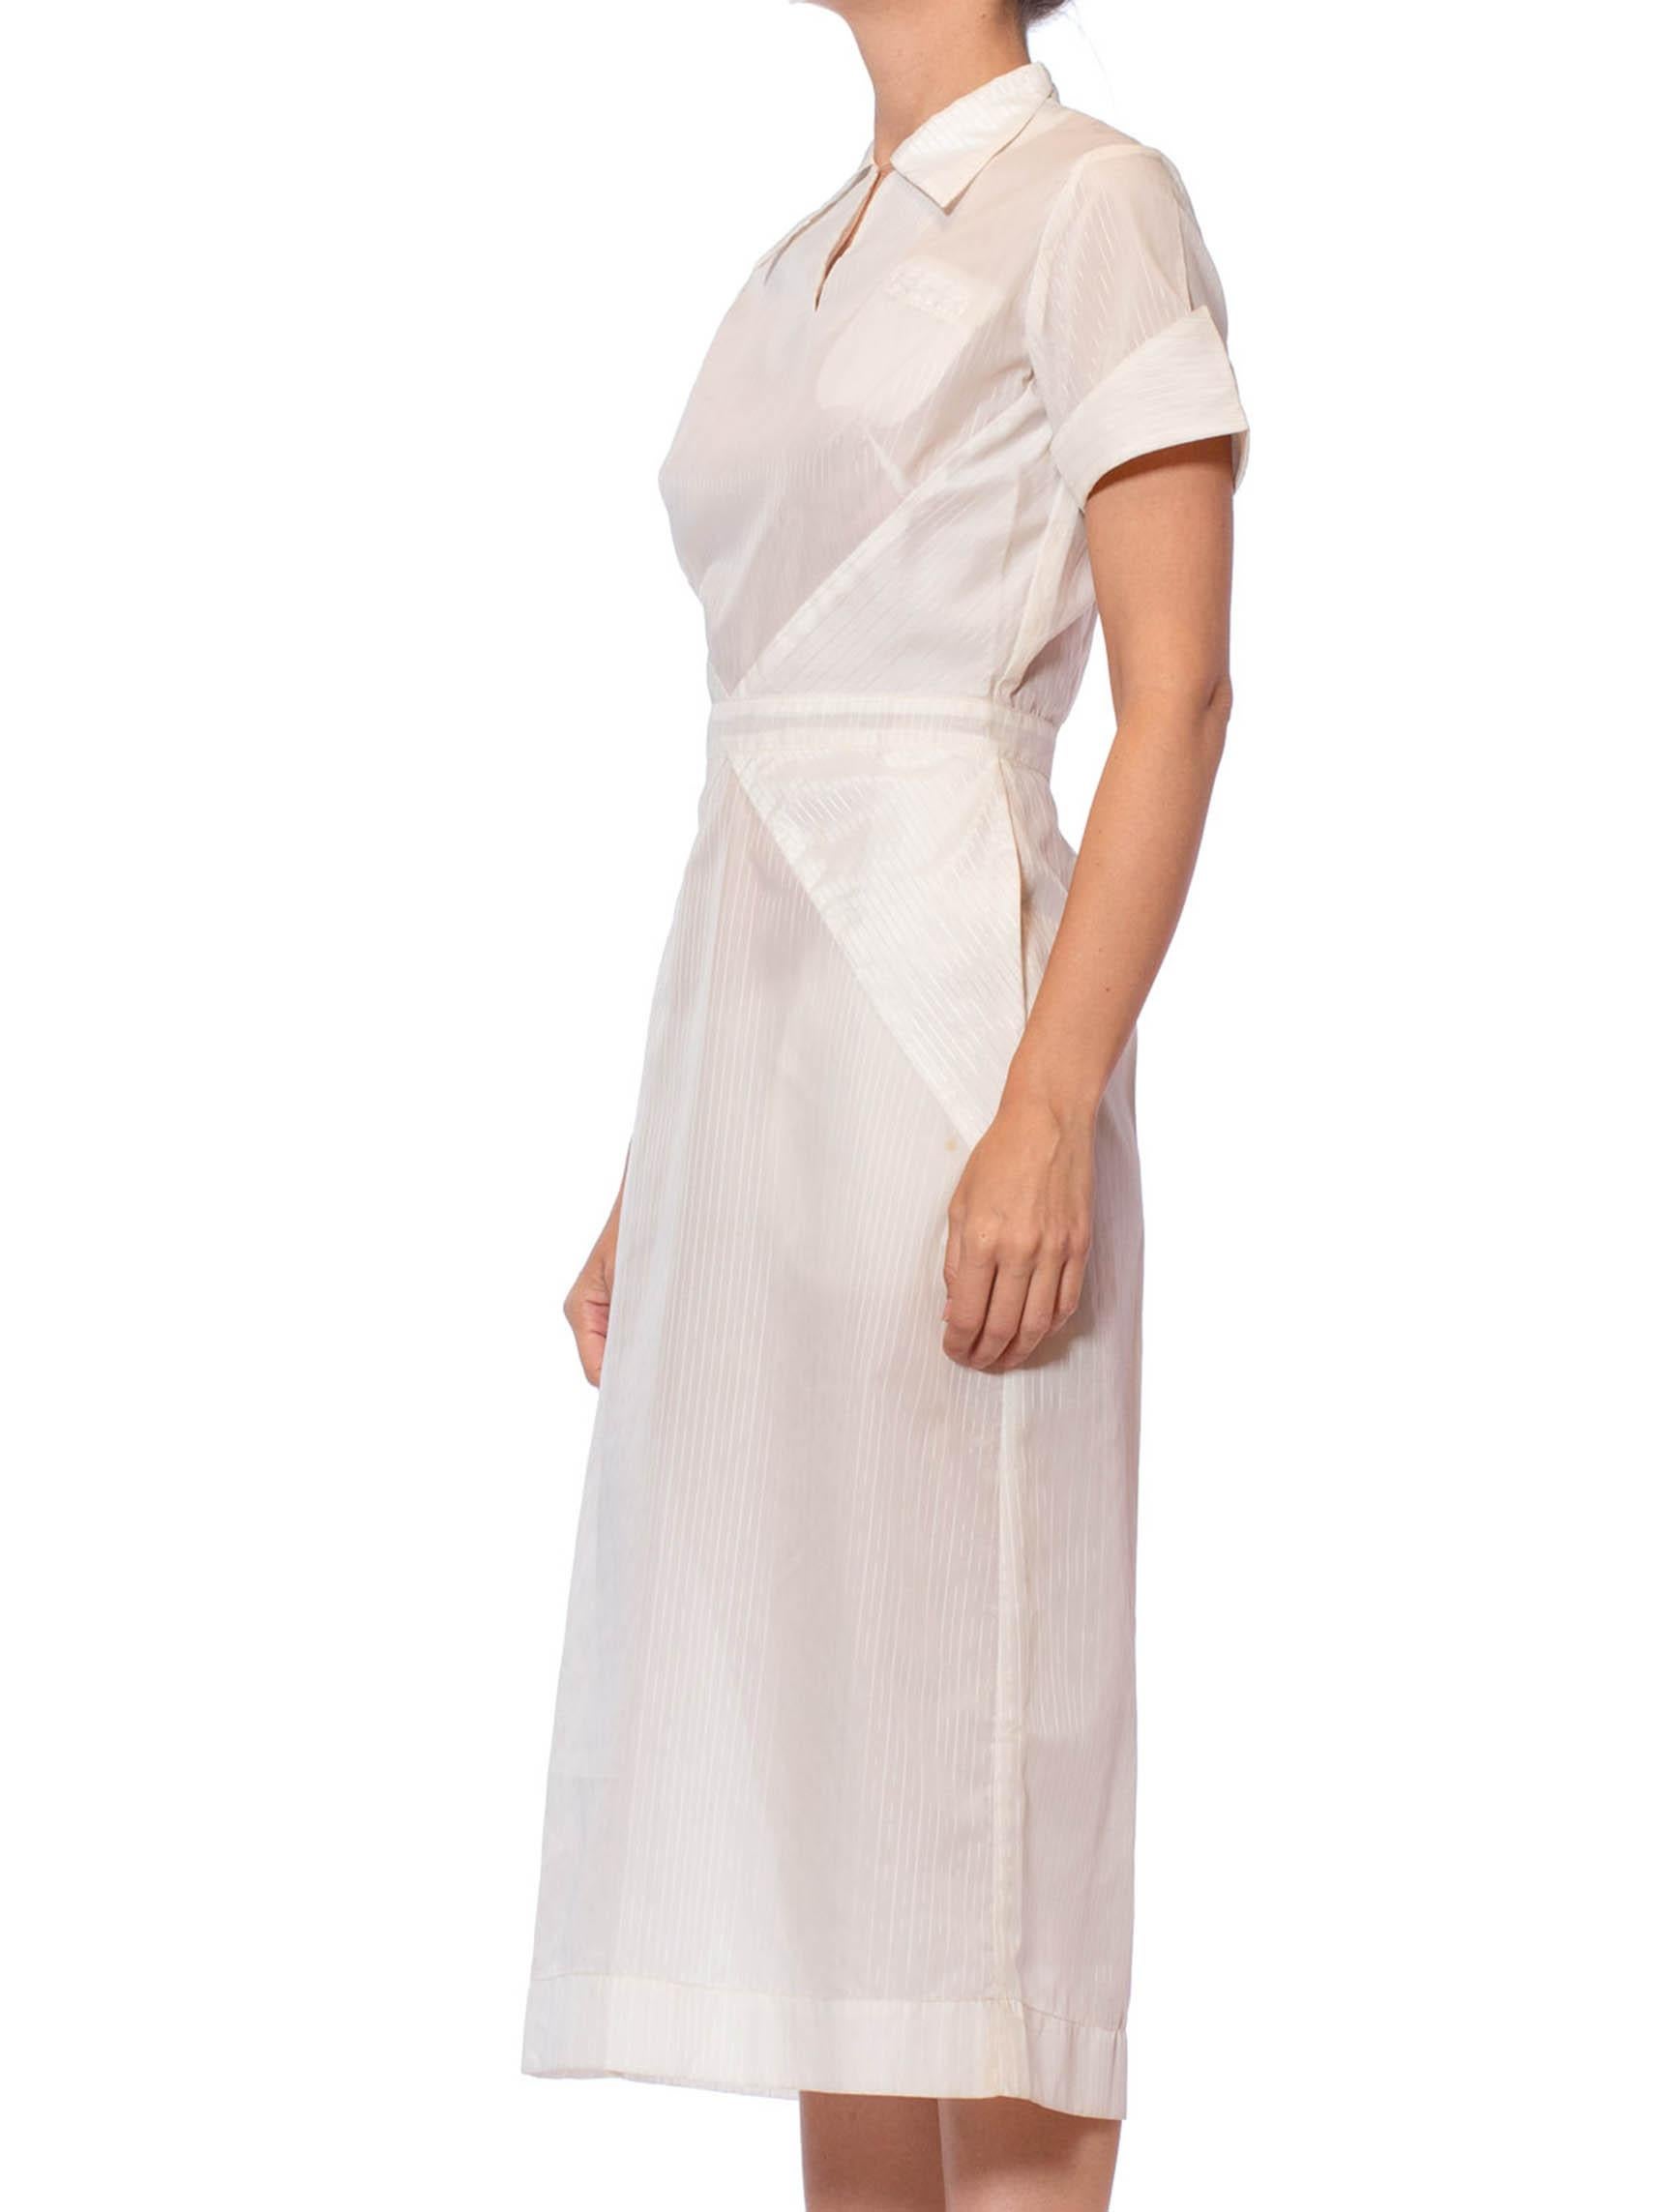 Women's 1950S White Nylon Pin-Up Nurse Uniform Dress